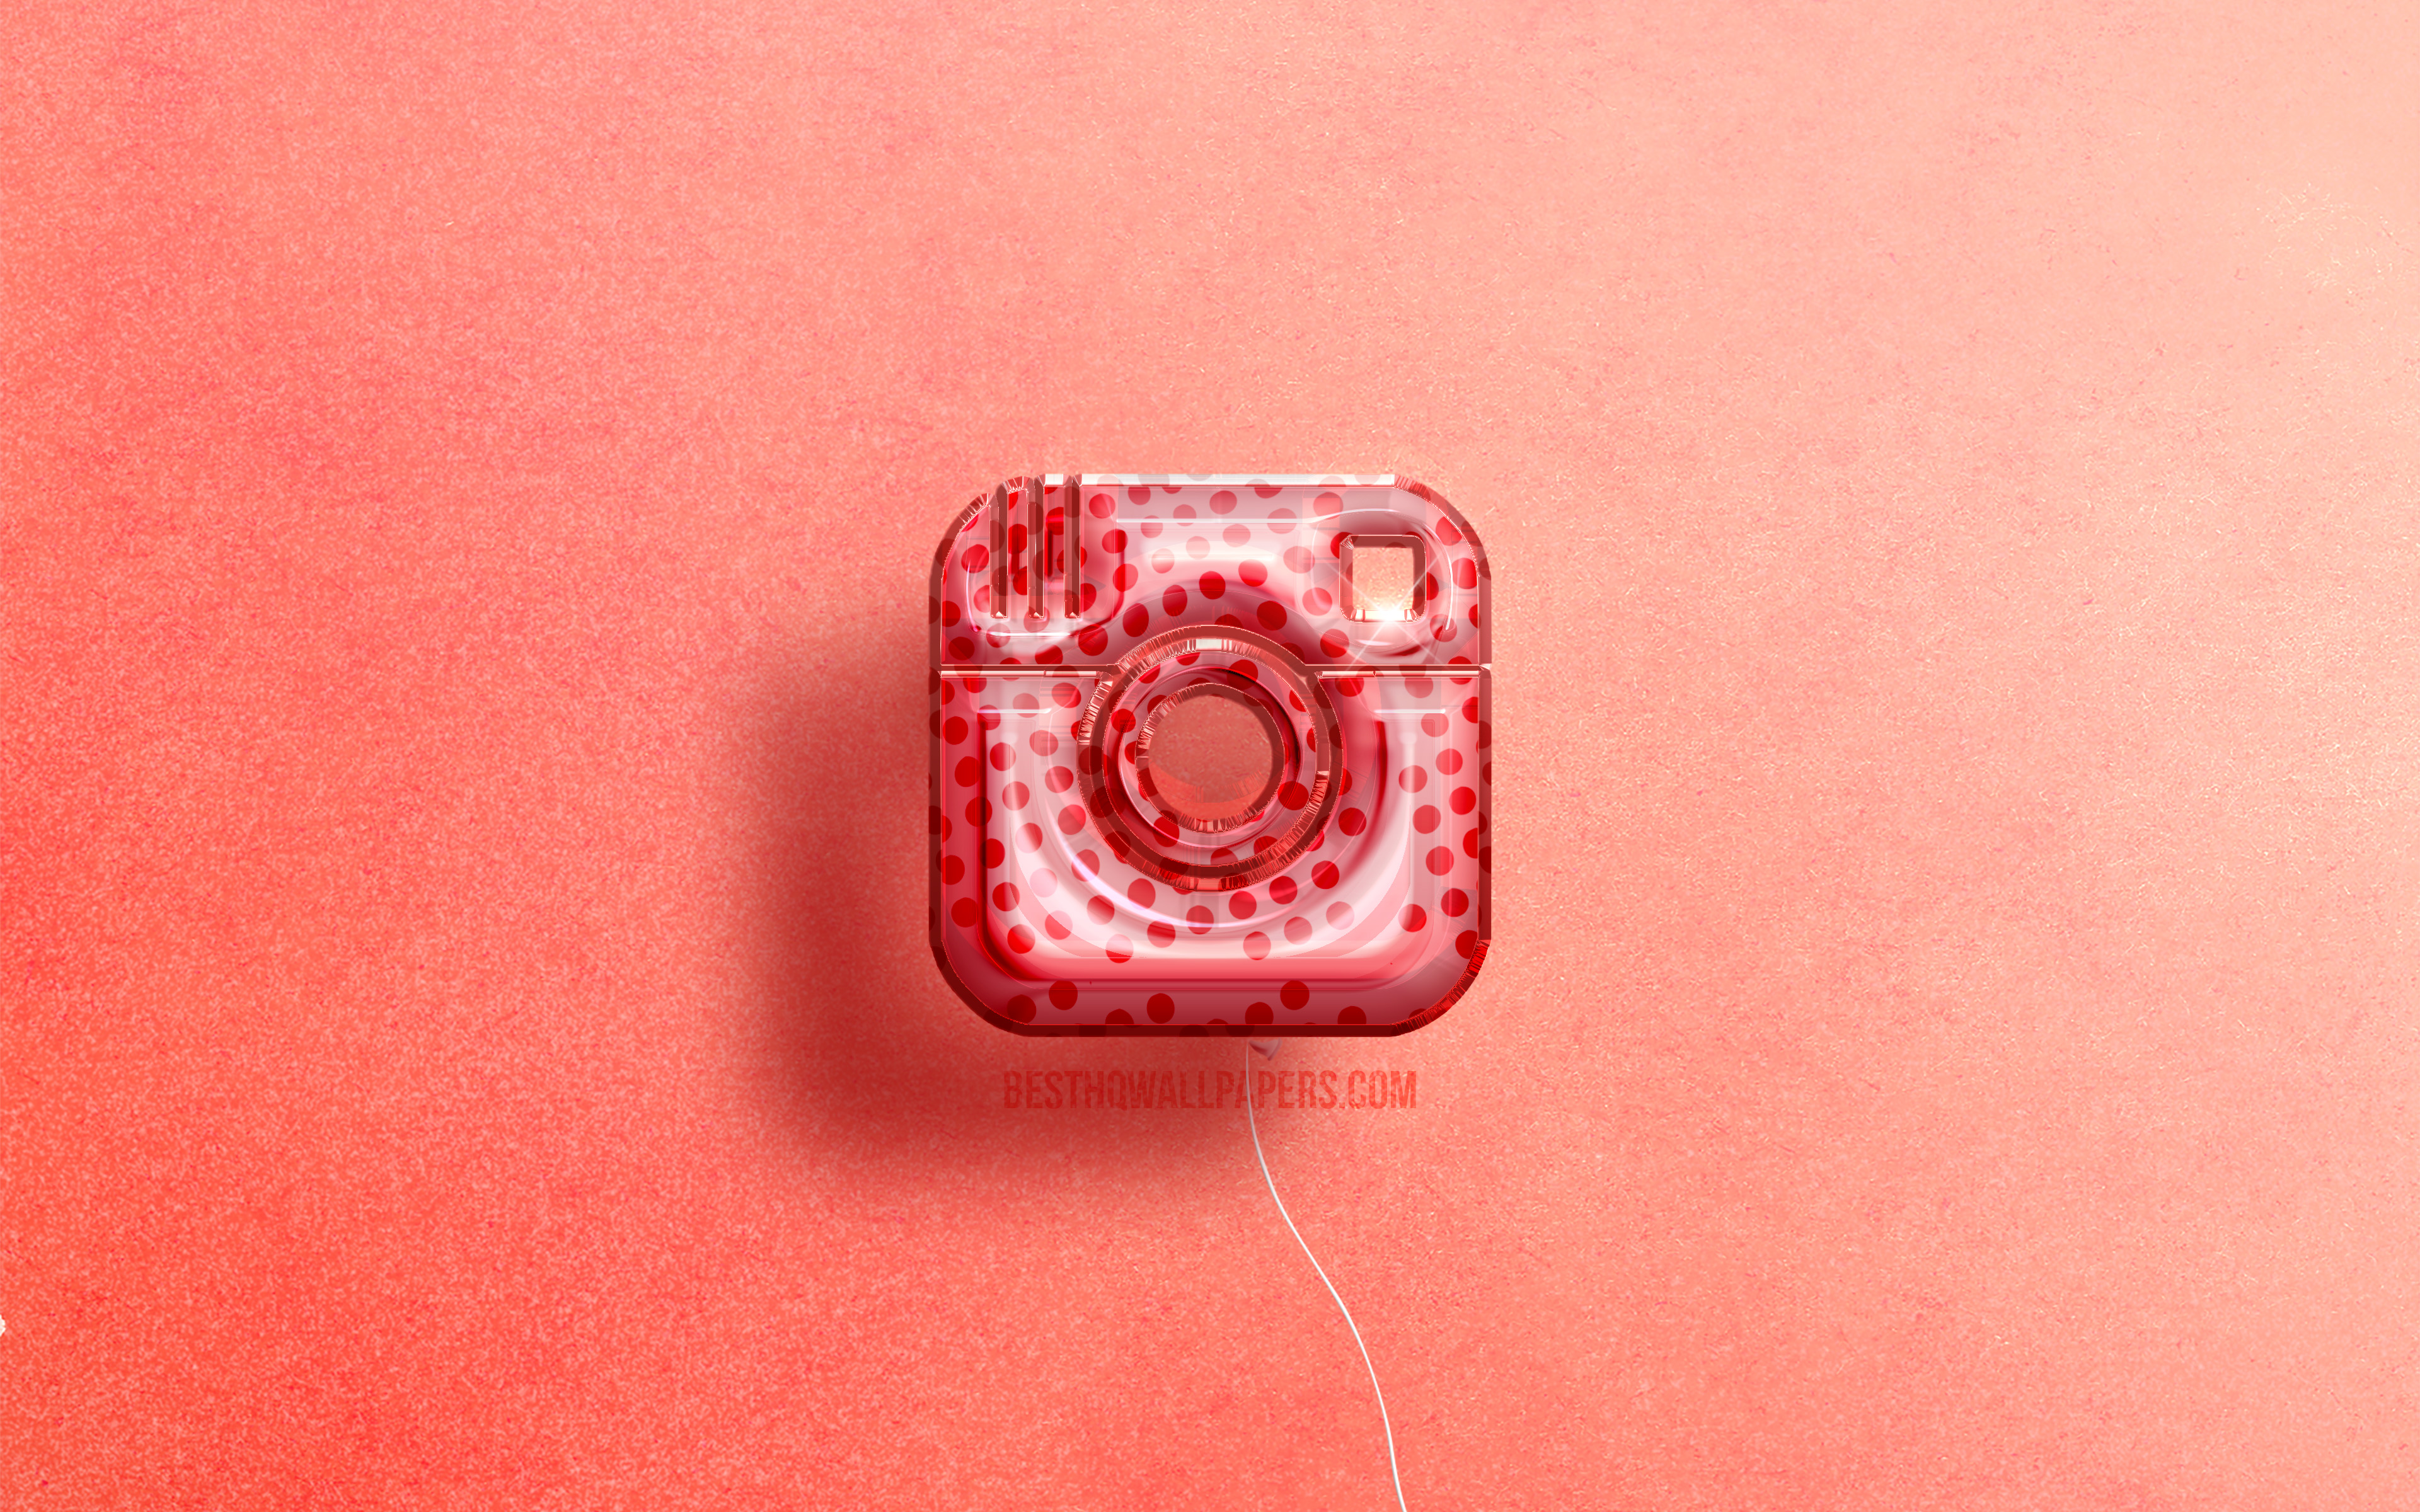 Download wallpaper 4K, Instagram 3D logo, artwork, social network, pink realistic balloons, Instagram logo, pink background, Instagram for desktop with resolution 3840x2400. High Quality HD picture wallpaper